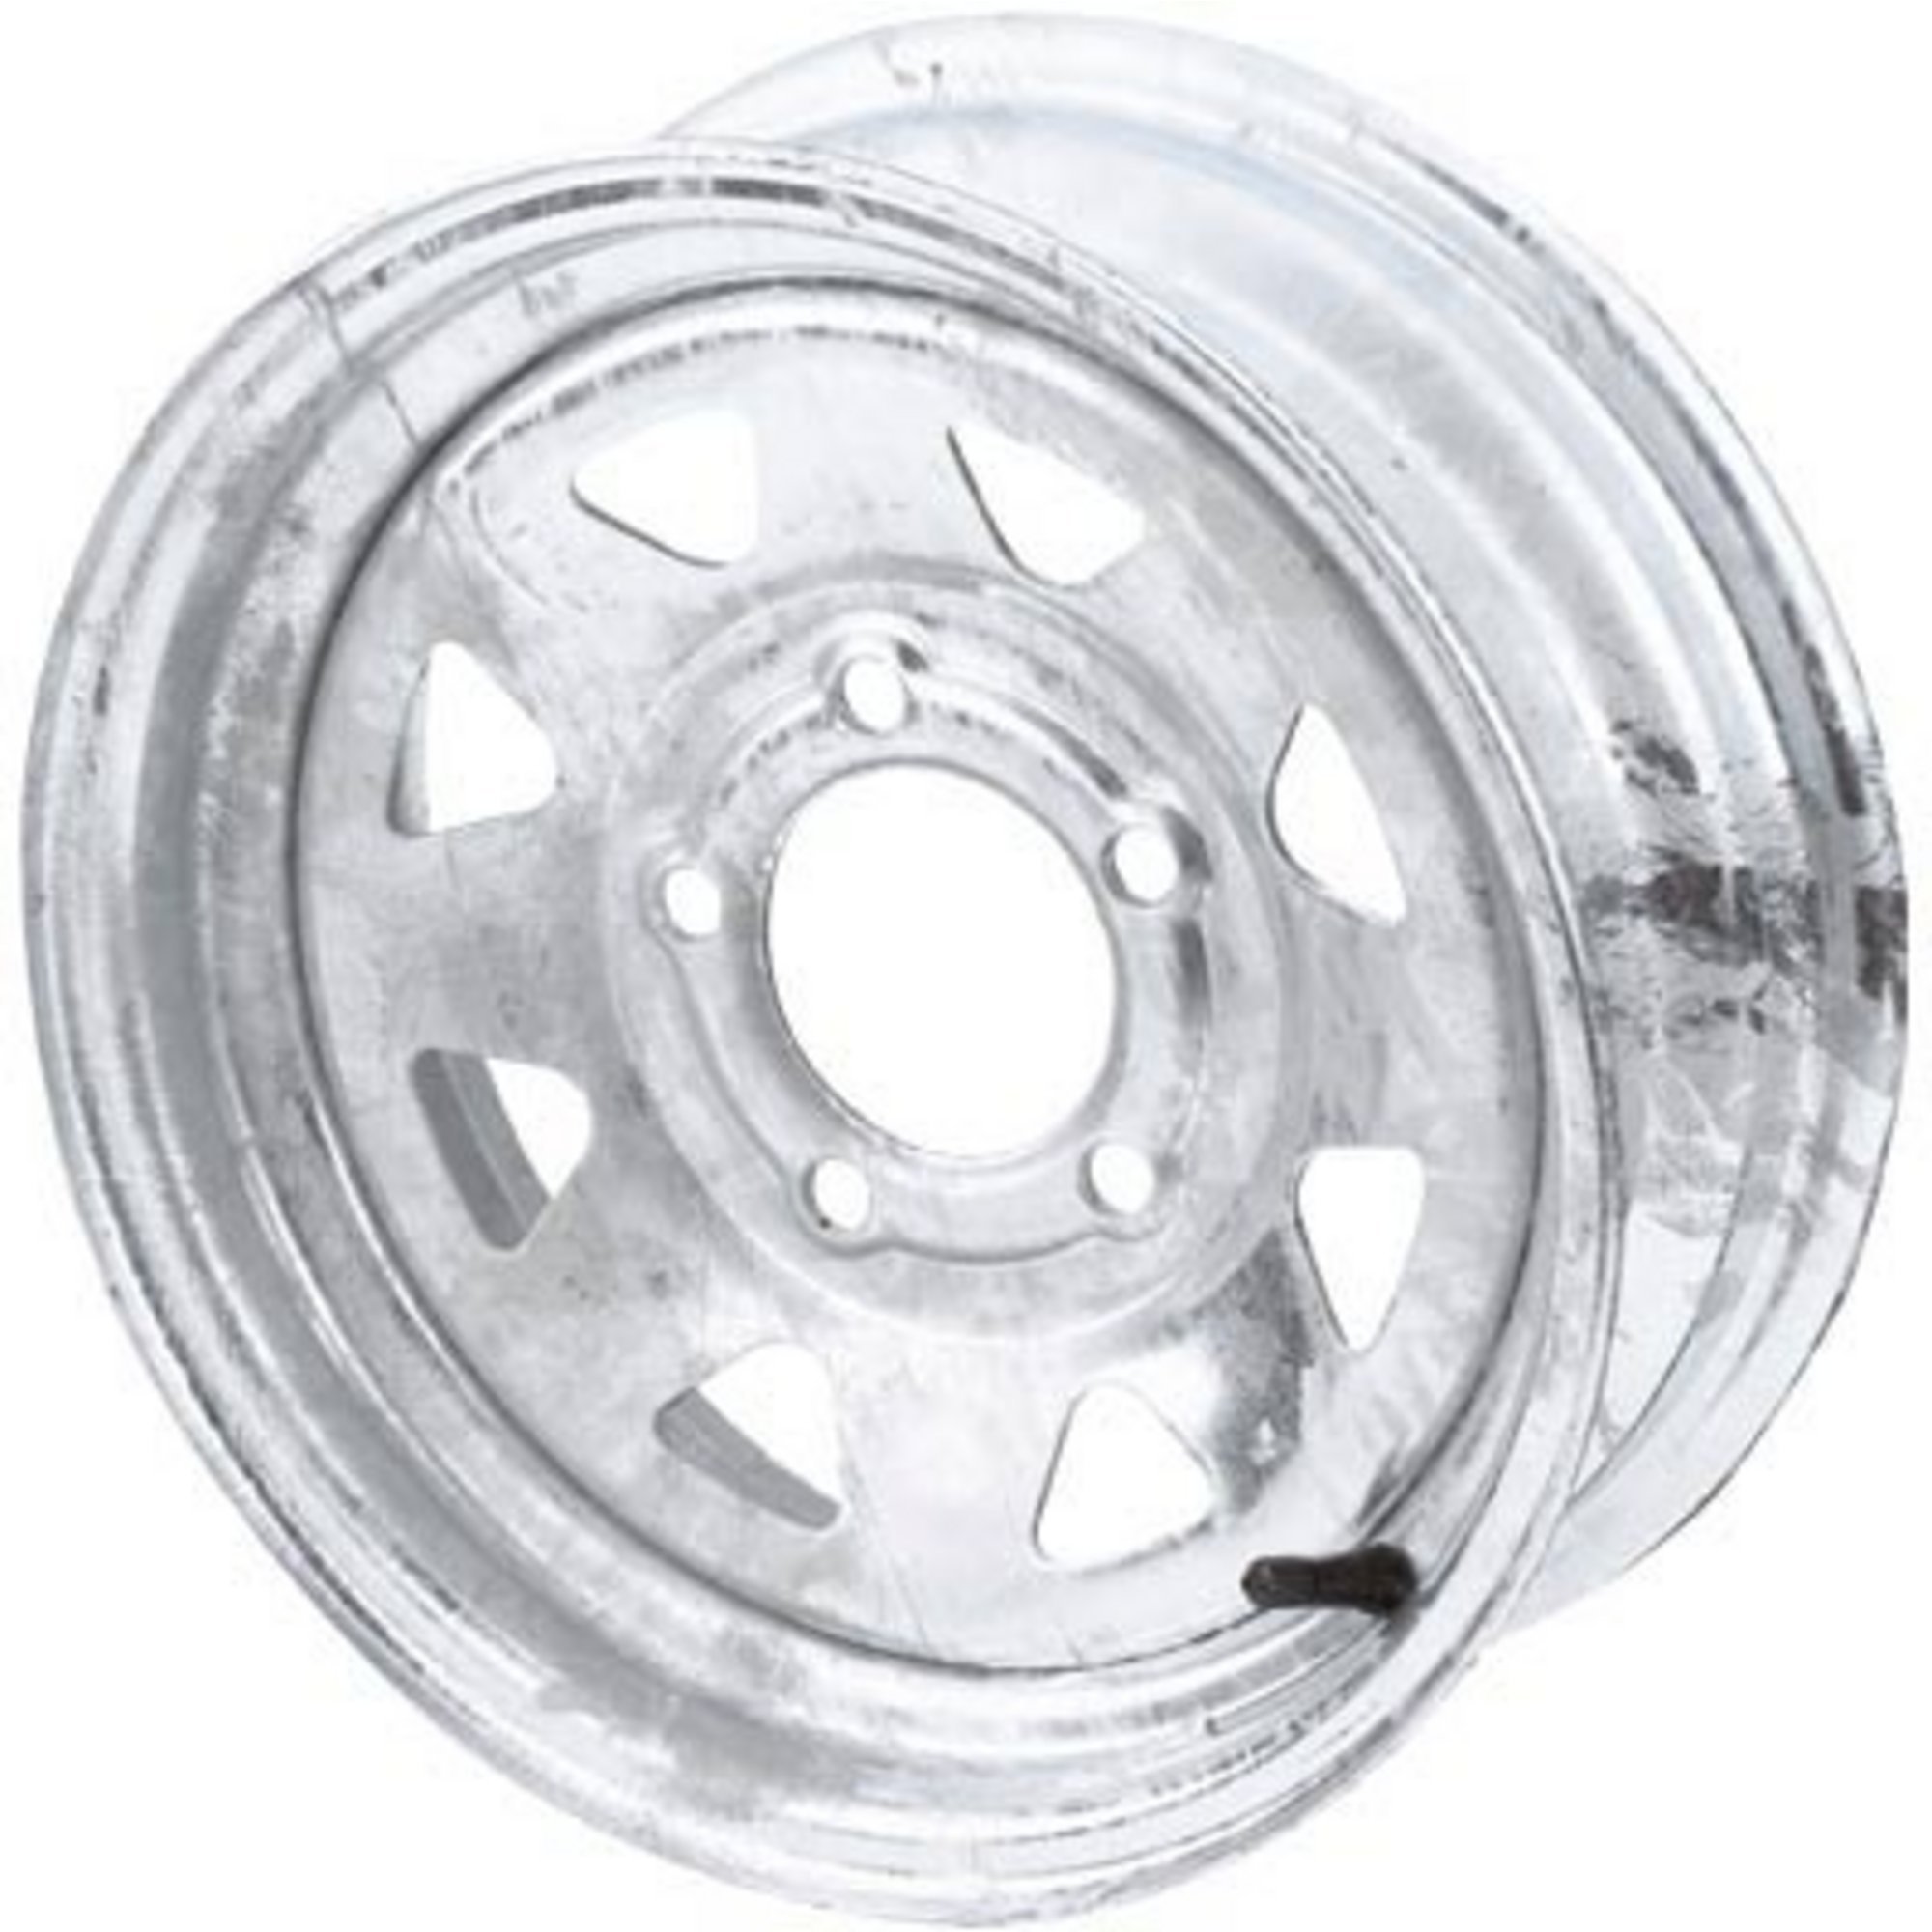 Martin Wheel 15Inch Galvanized Spoked Trailer Tire Wheel â Rim Only, 5-Hole, Fits Tire Sizes ST205/75-15 and F78-15, Model R-155S-G-VN